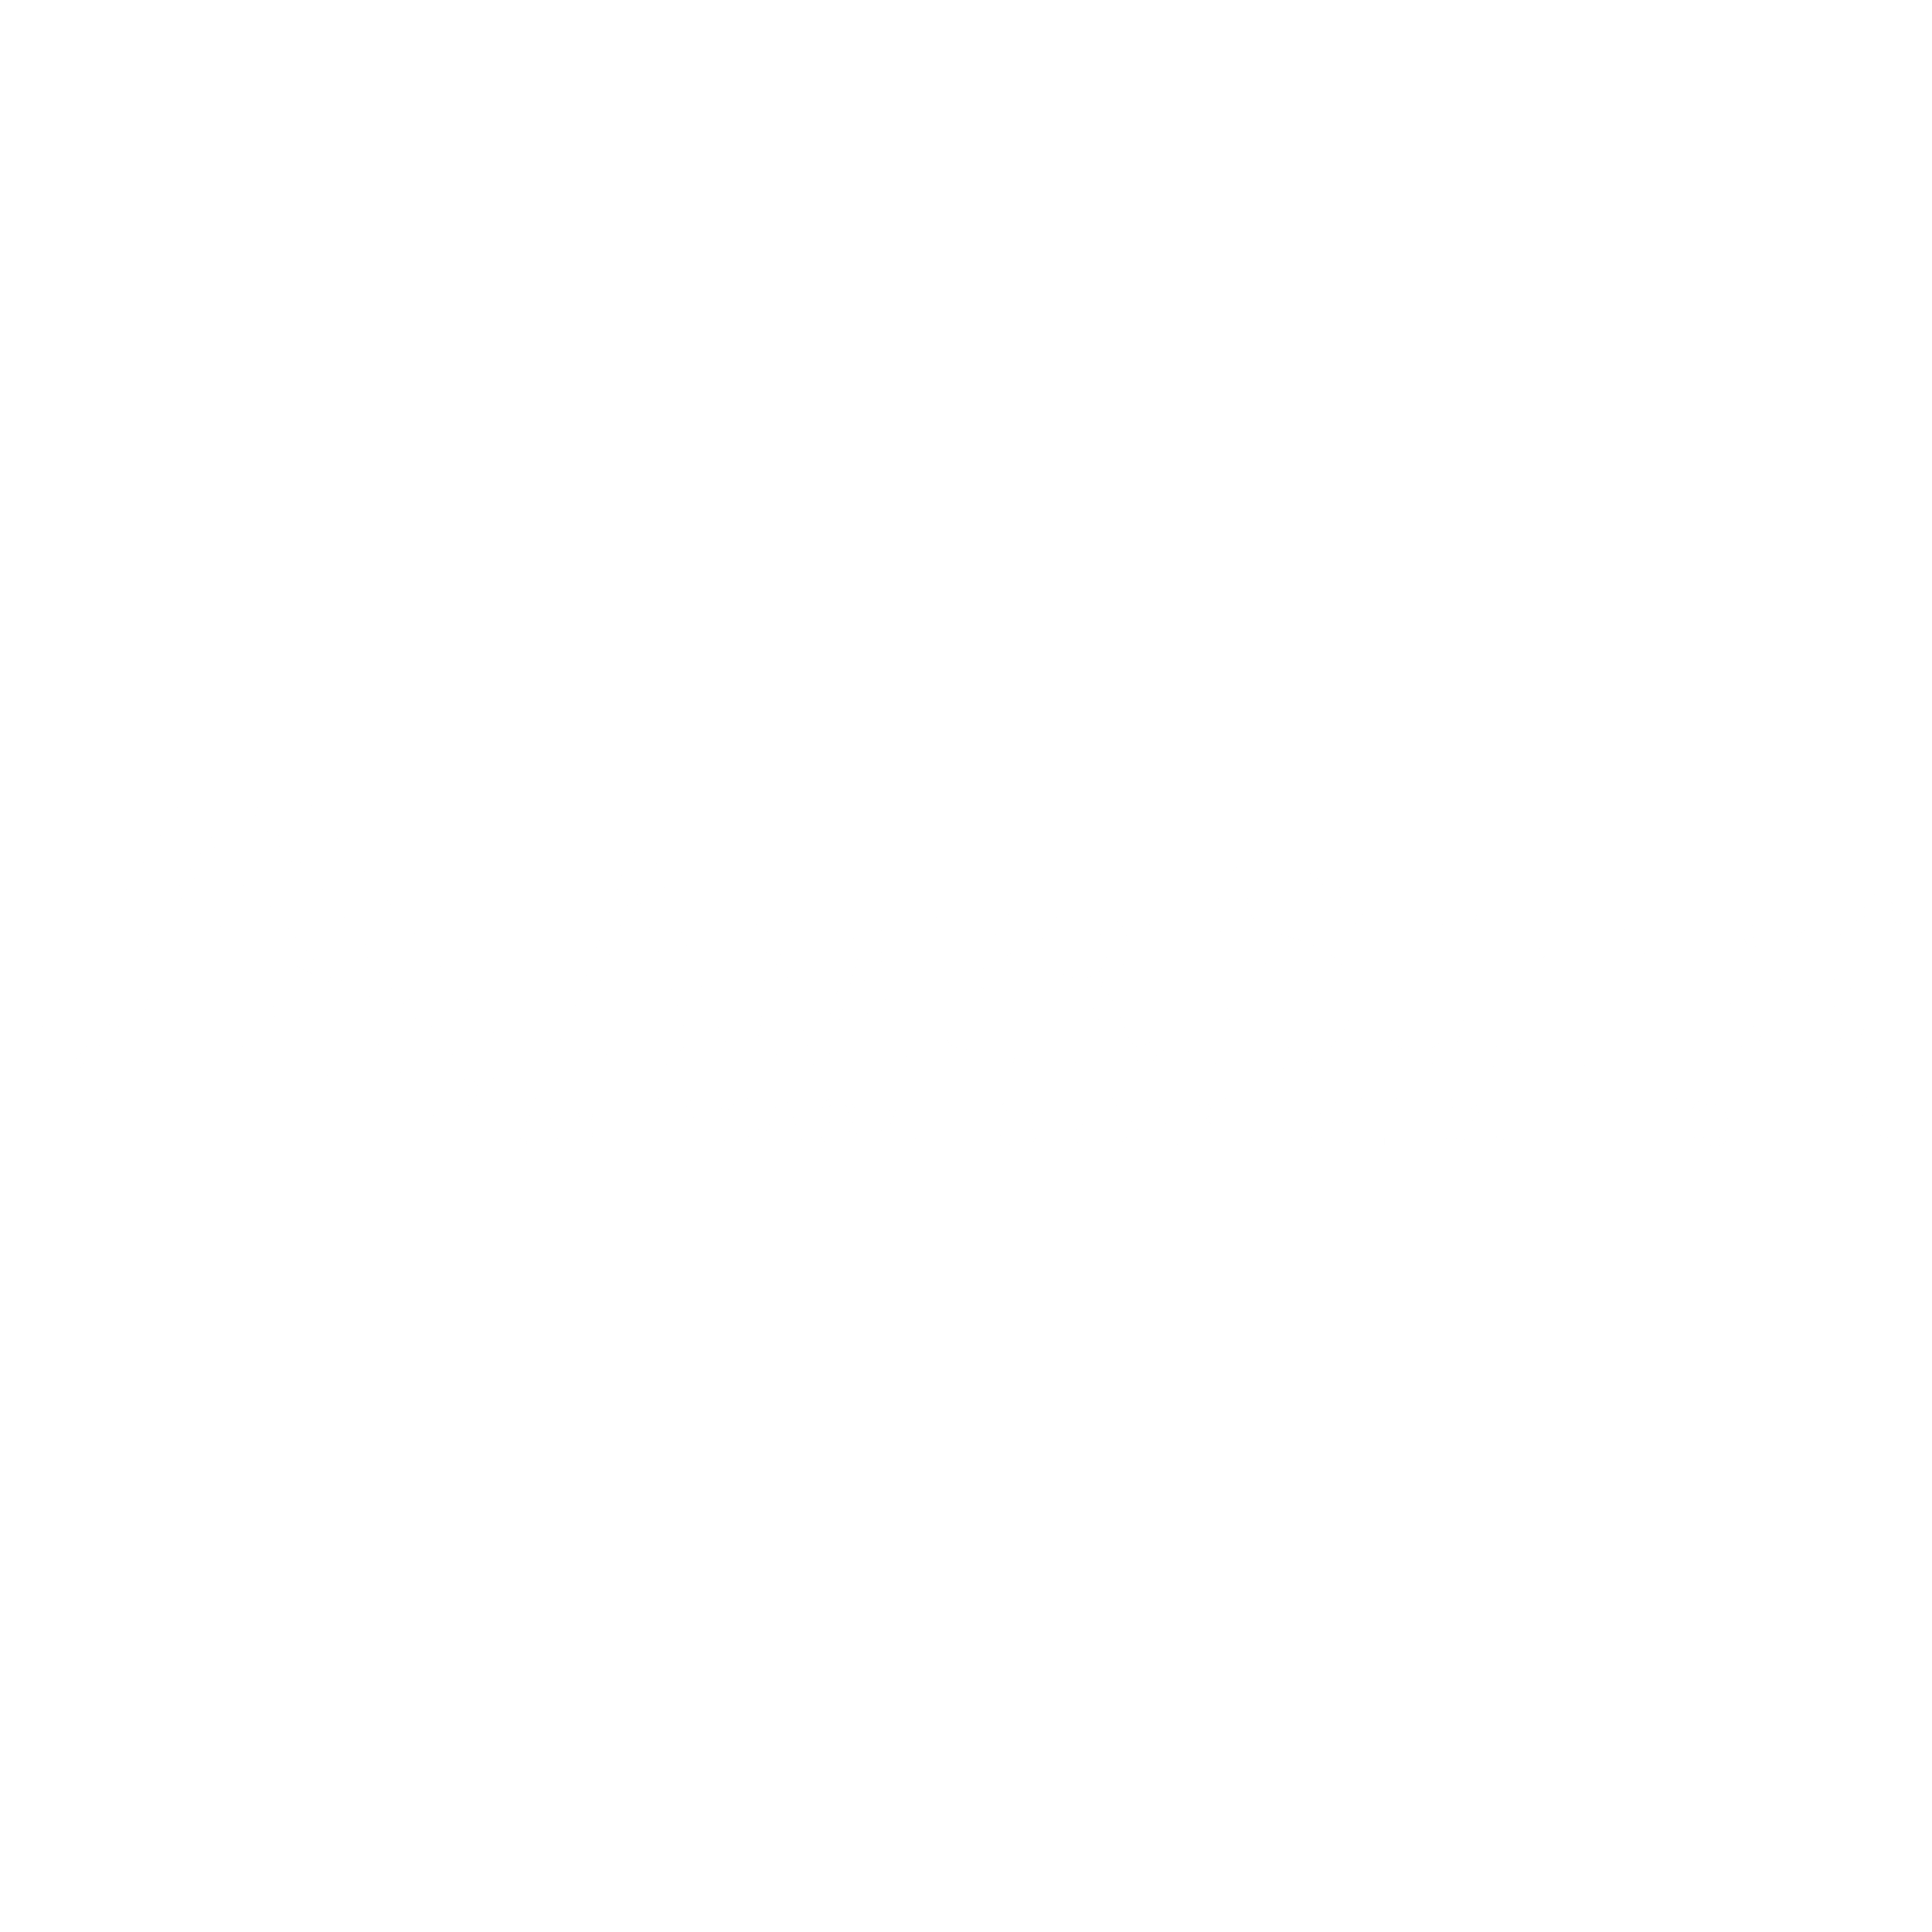 Amerisuites Logo - AmeriSuites Logo PNG Transparent & SVG Vector